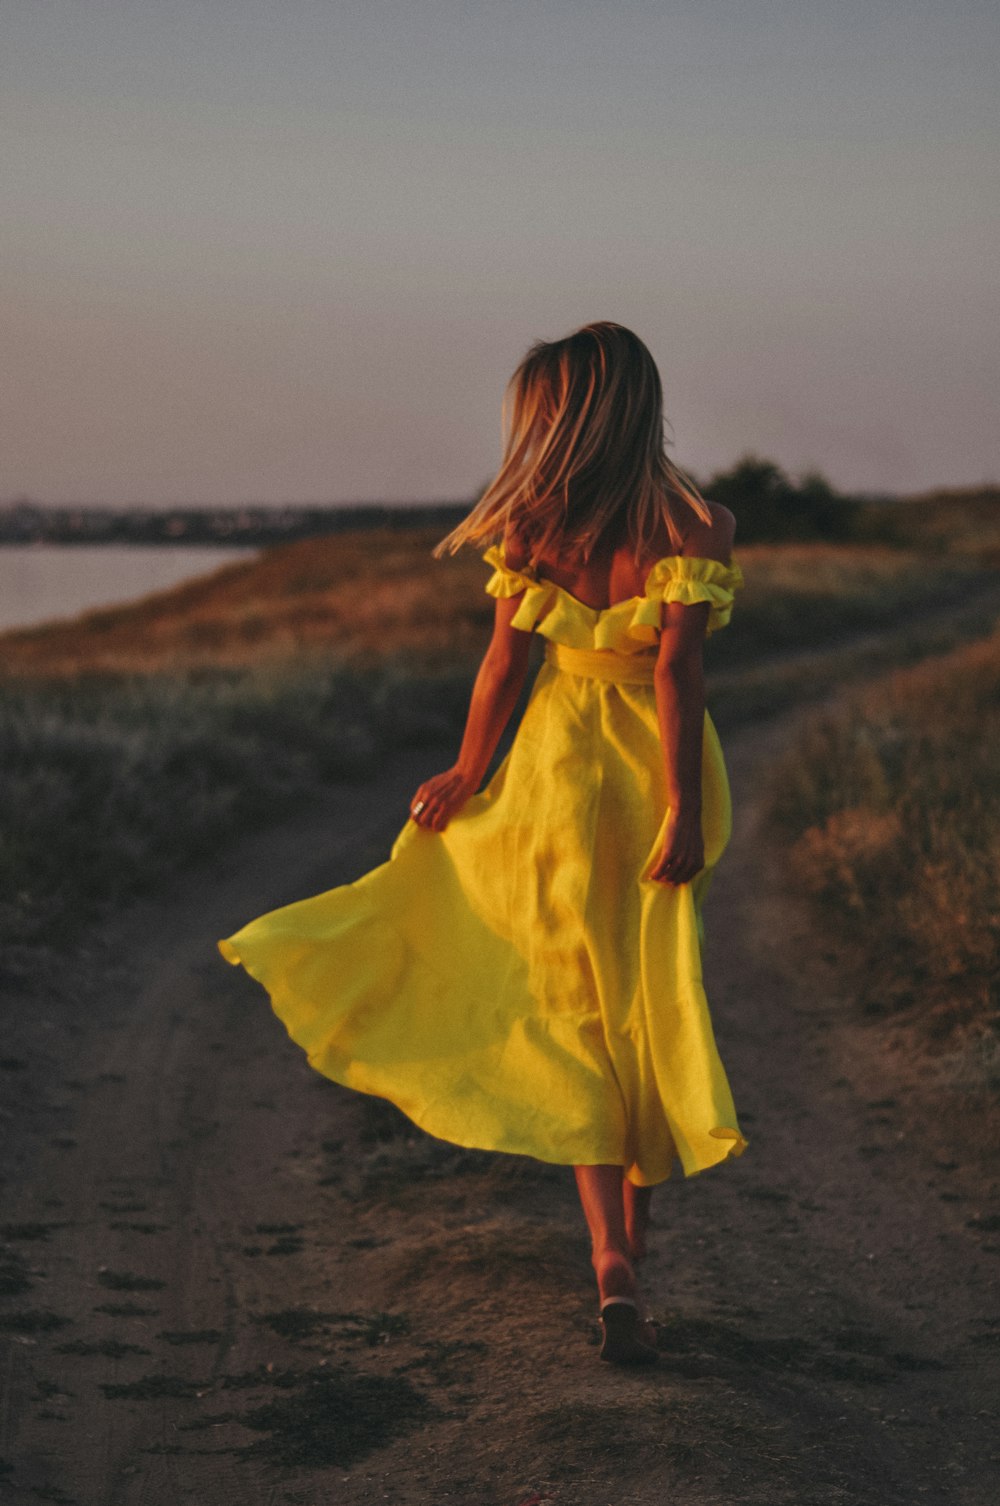 a woman in a yellow dress walking down a dirt road